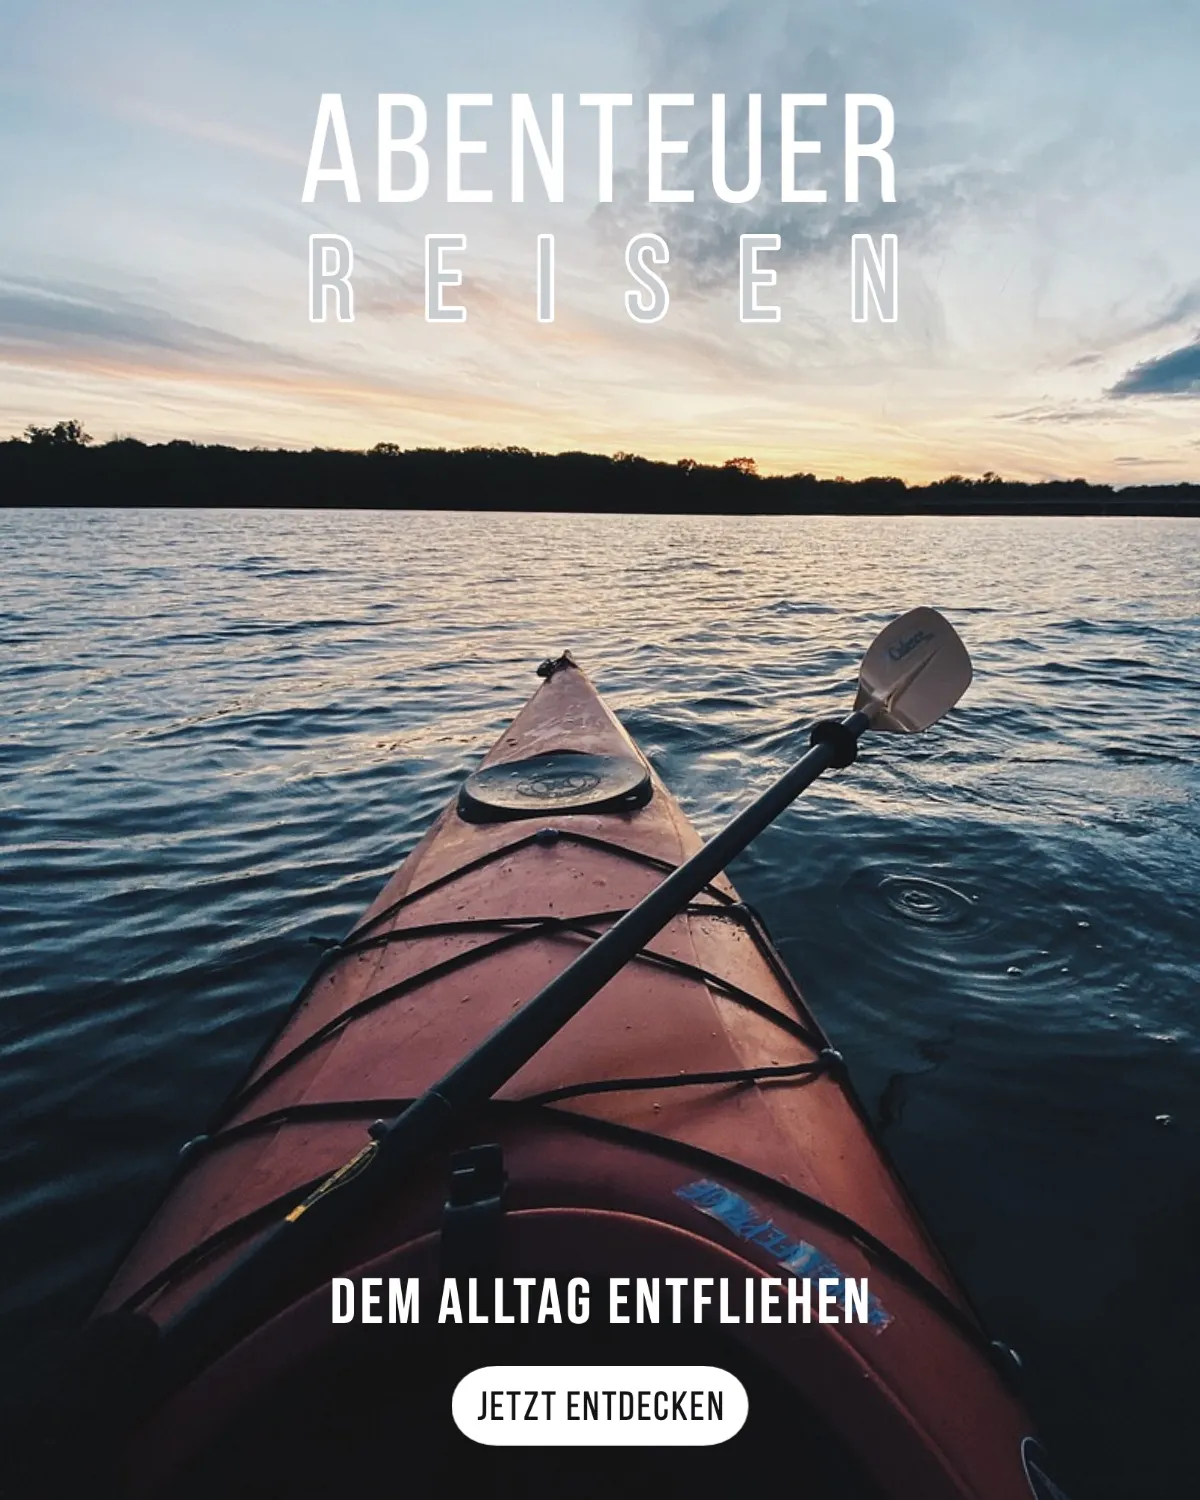 Kayaking Adventure Travel Instagram Feed Ad